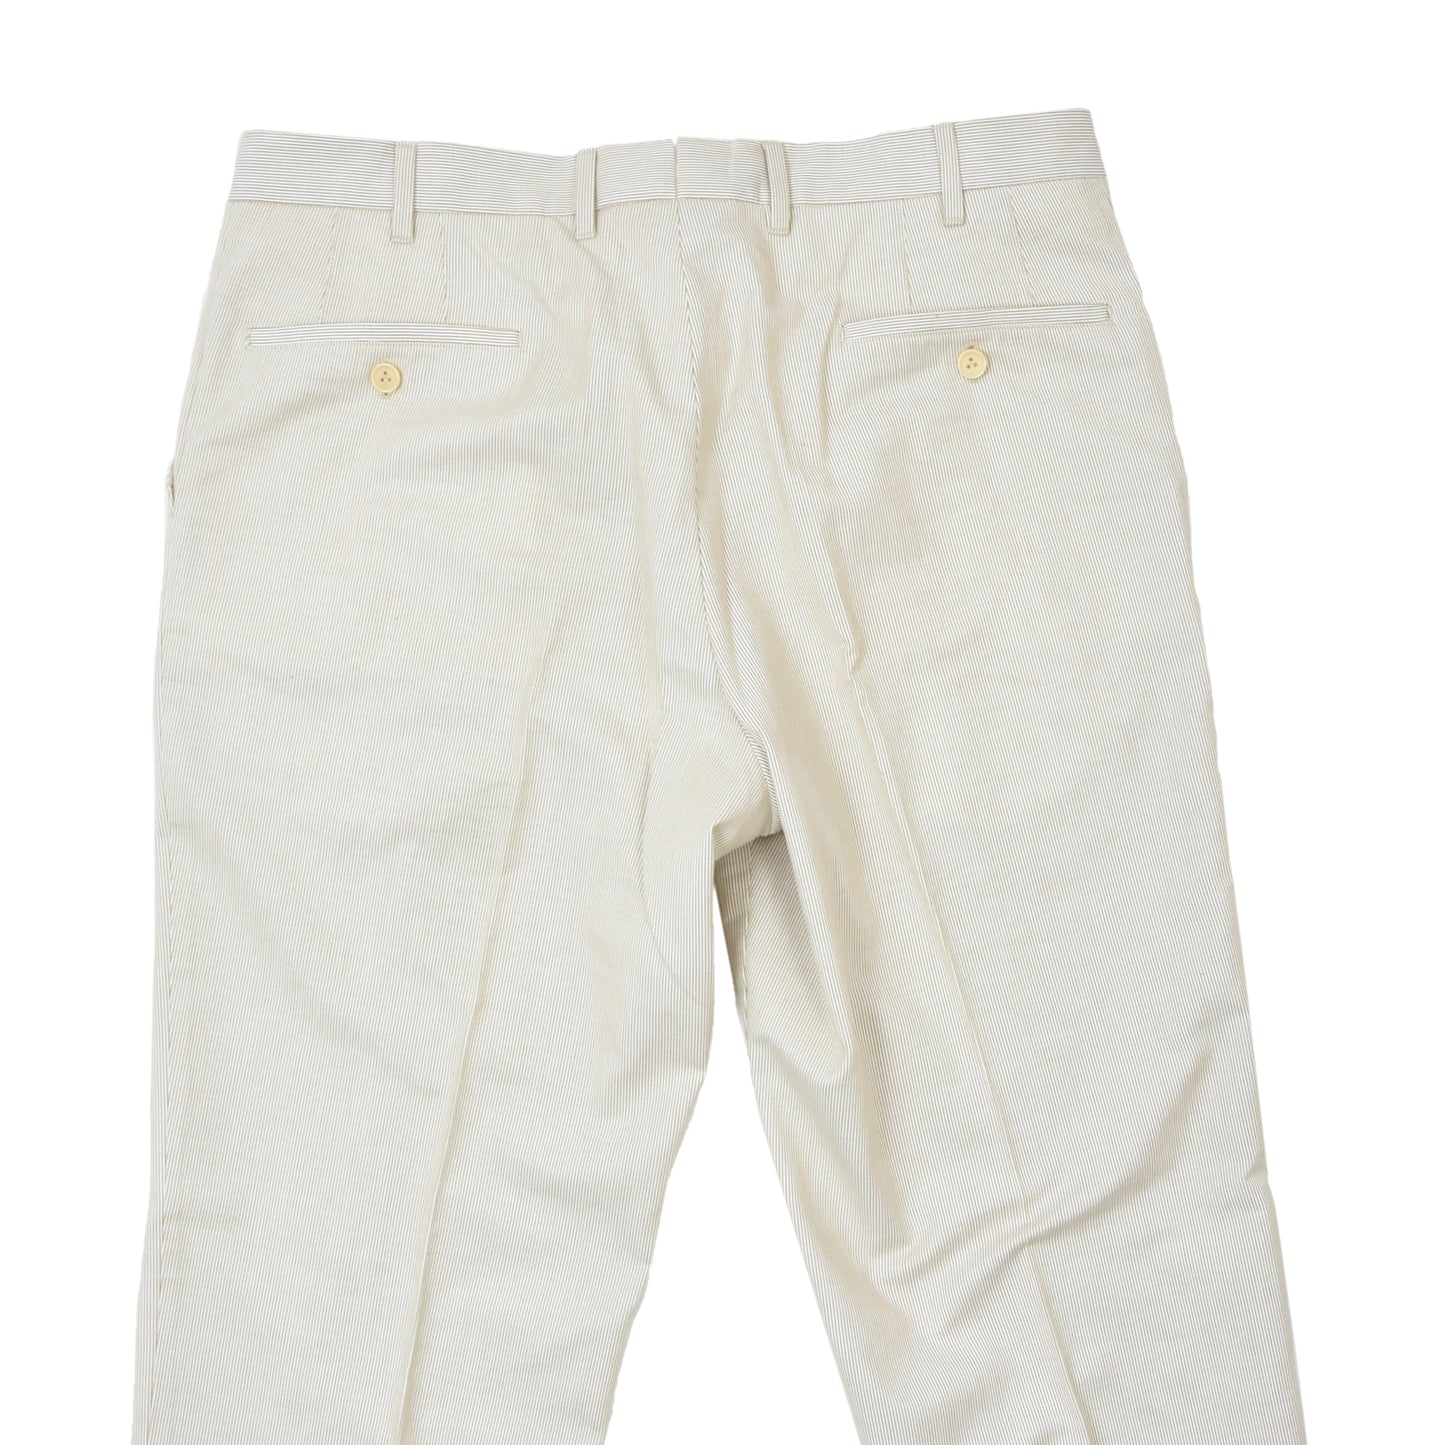 Van Laack Exlcusive Cotton Chinos/Pants Size 42R - Stripes